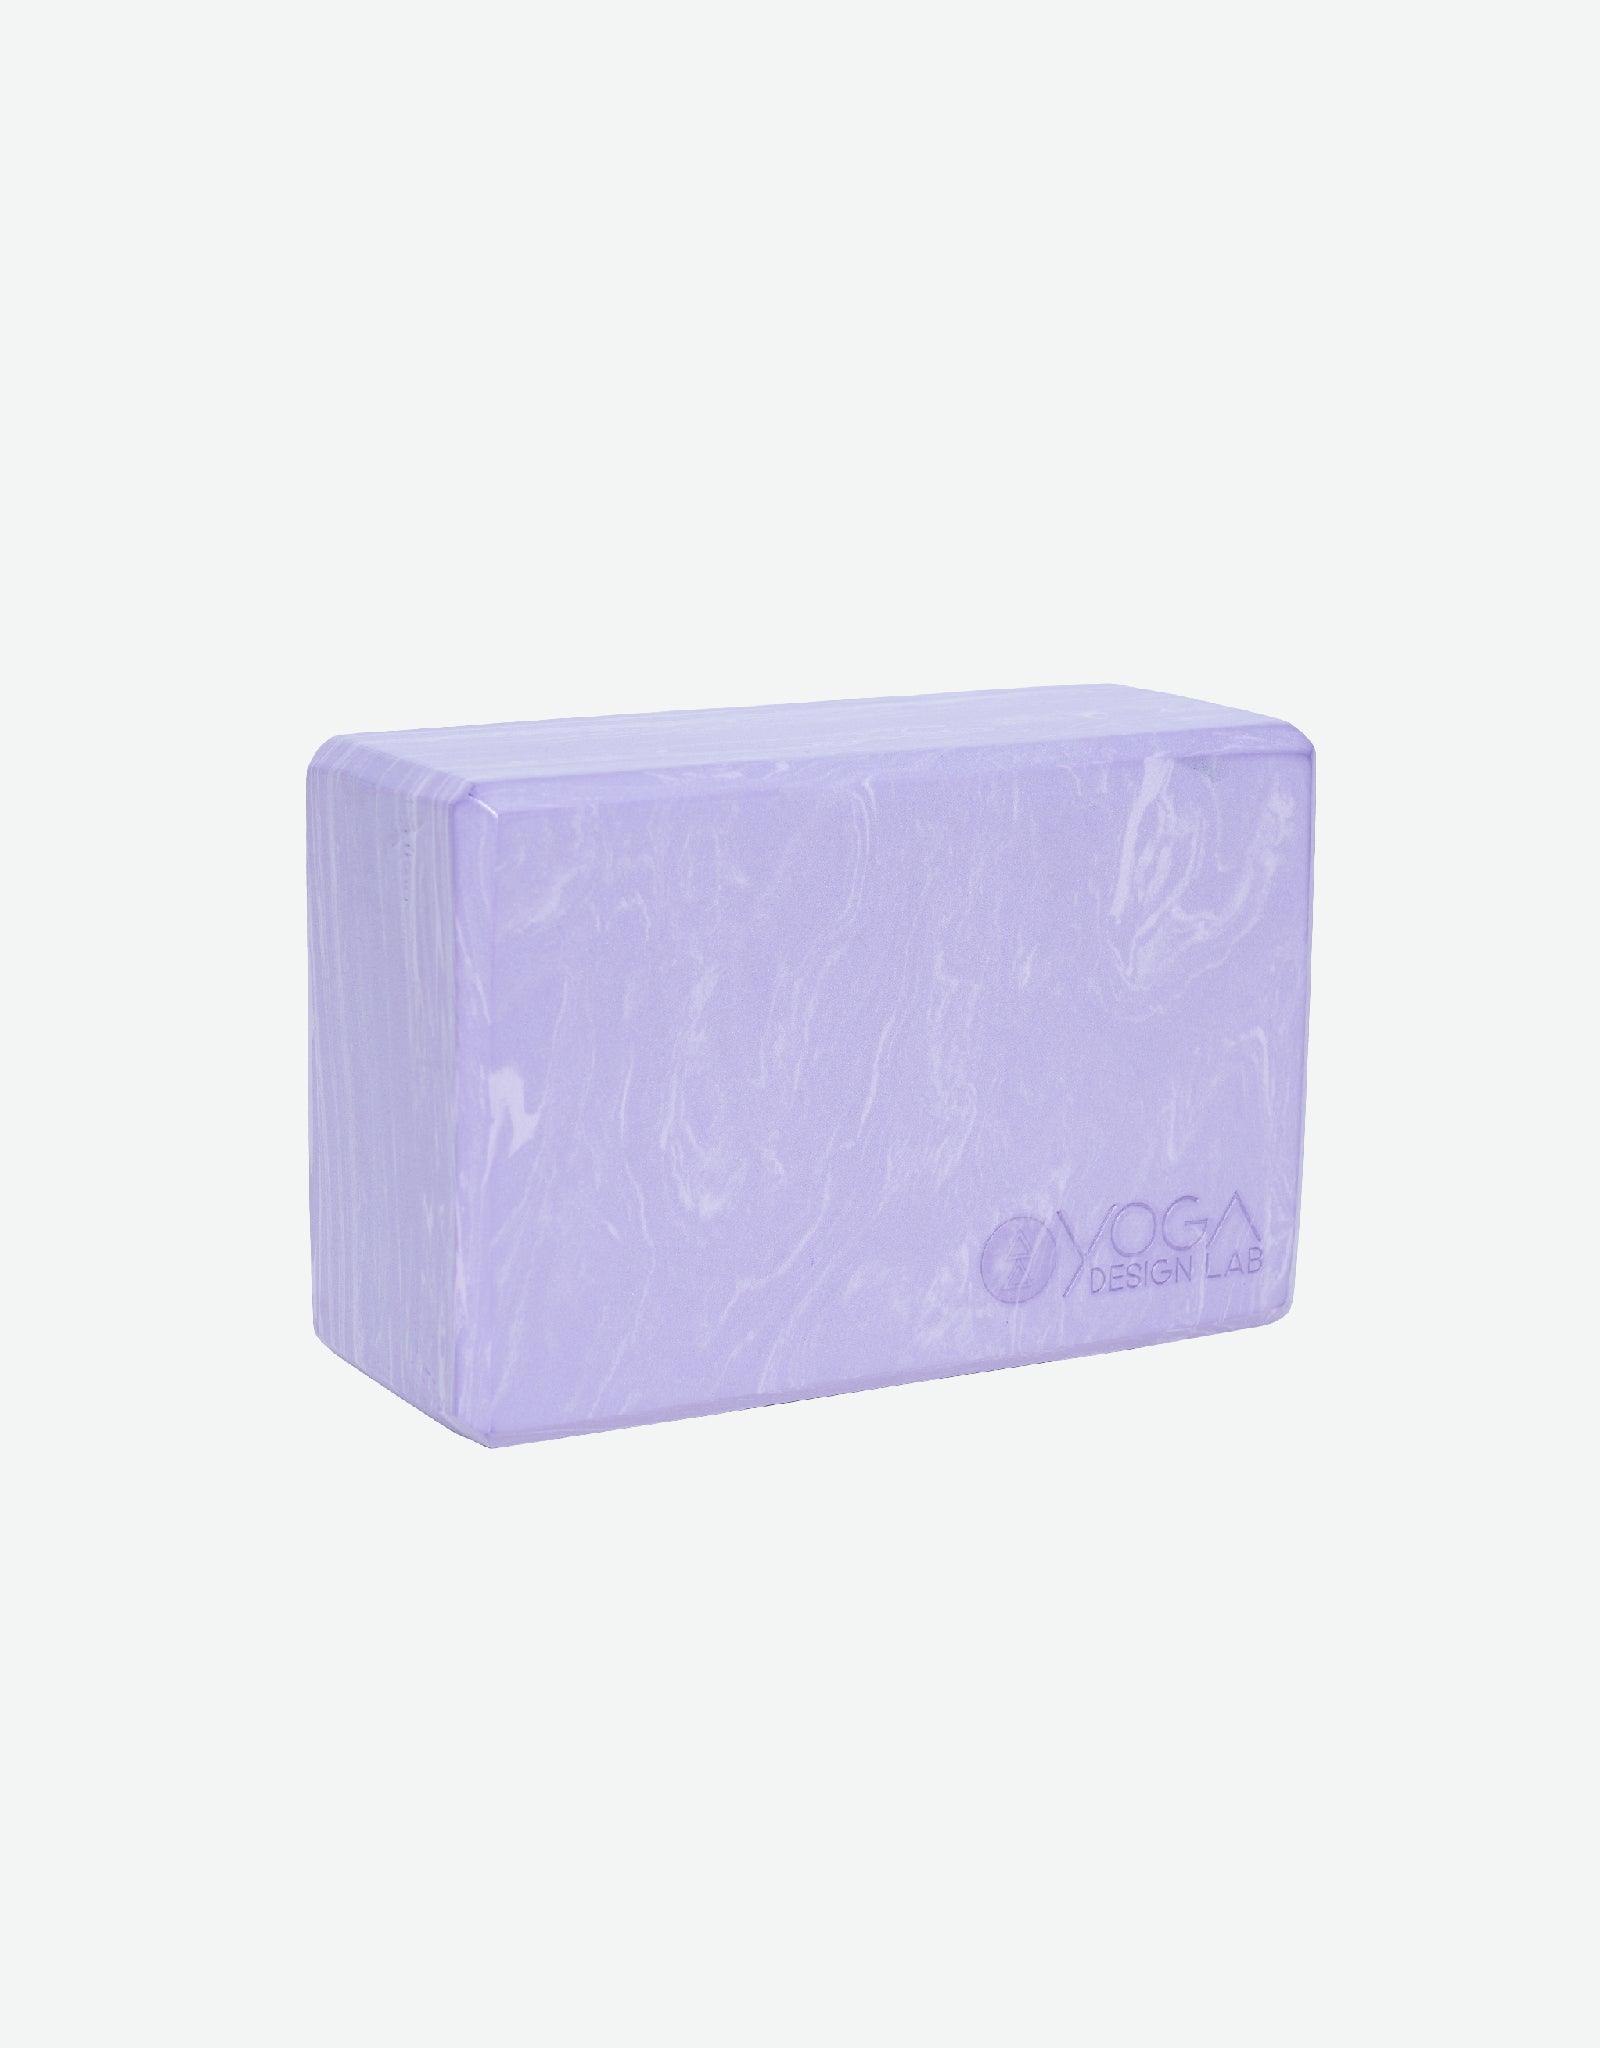 Foam Yoga Block - Foam - Block - Lavender - For Restorative & Yin Yoga - Yoga Design Lab 